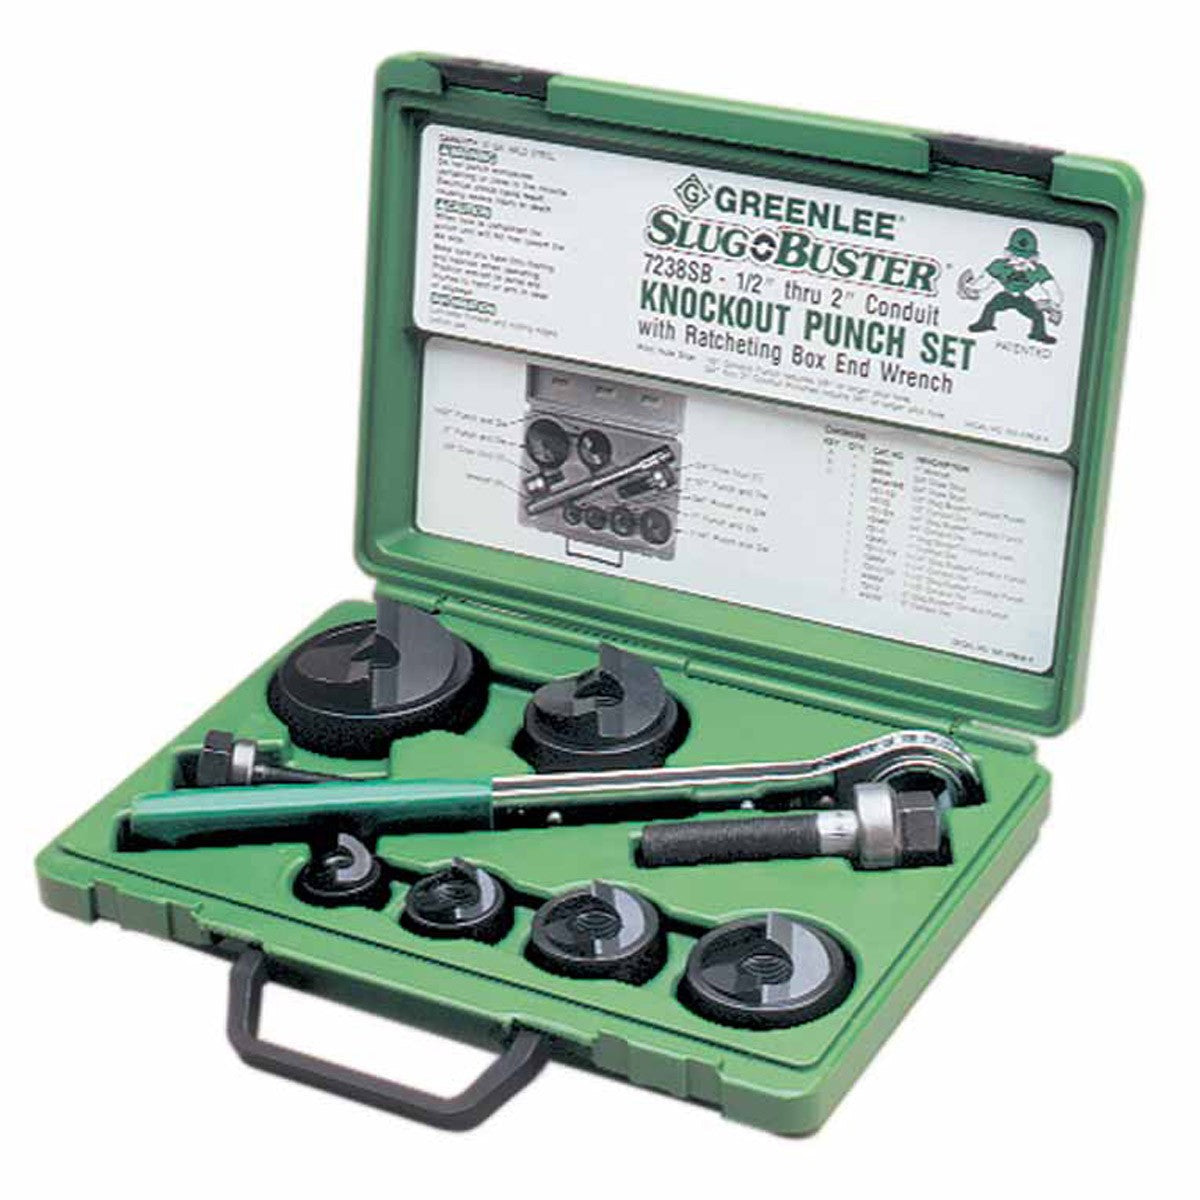 Greenlee 7238SB Slug-Buster Knockout Kit with Ratchet Wrench 1/2